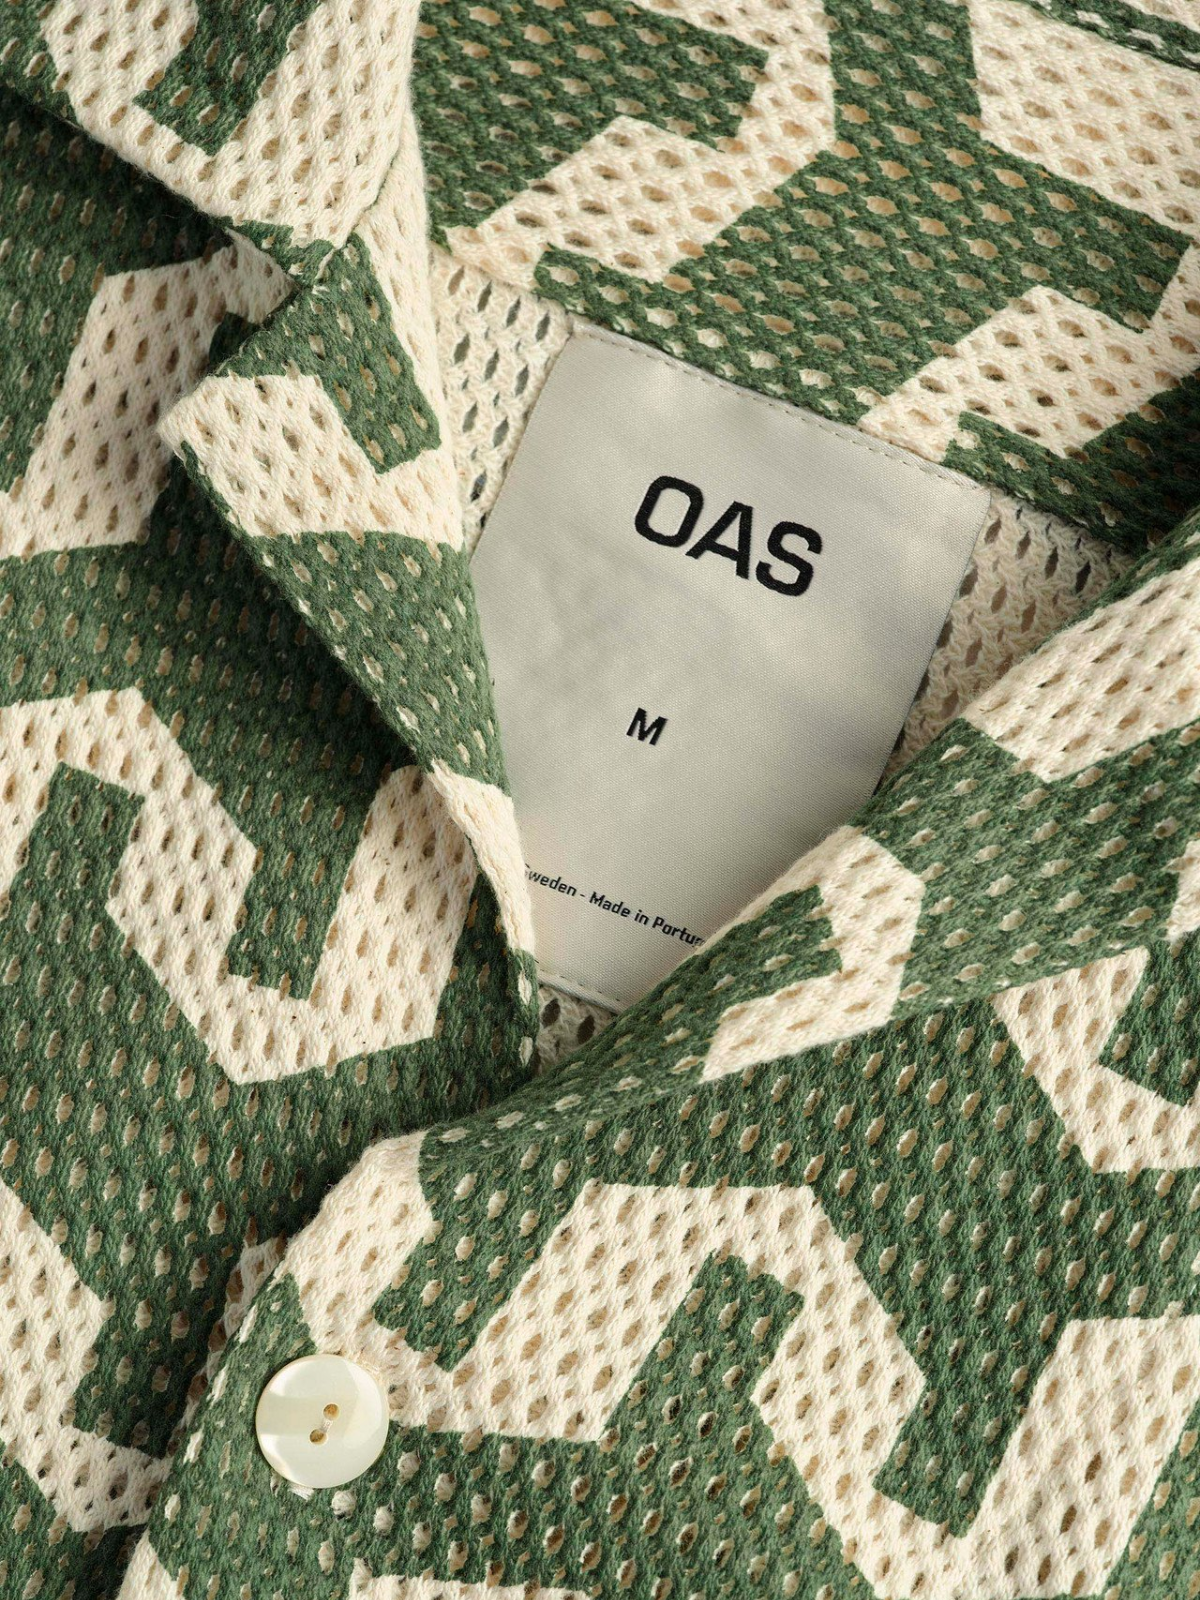 oas atlas cuba net ss short sleeve shirt green cream geometric design kempt athens ga georgia men's clothing store